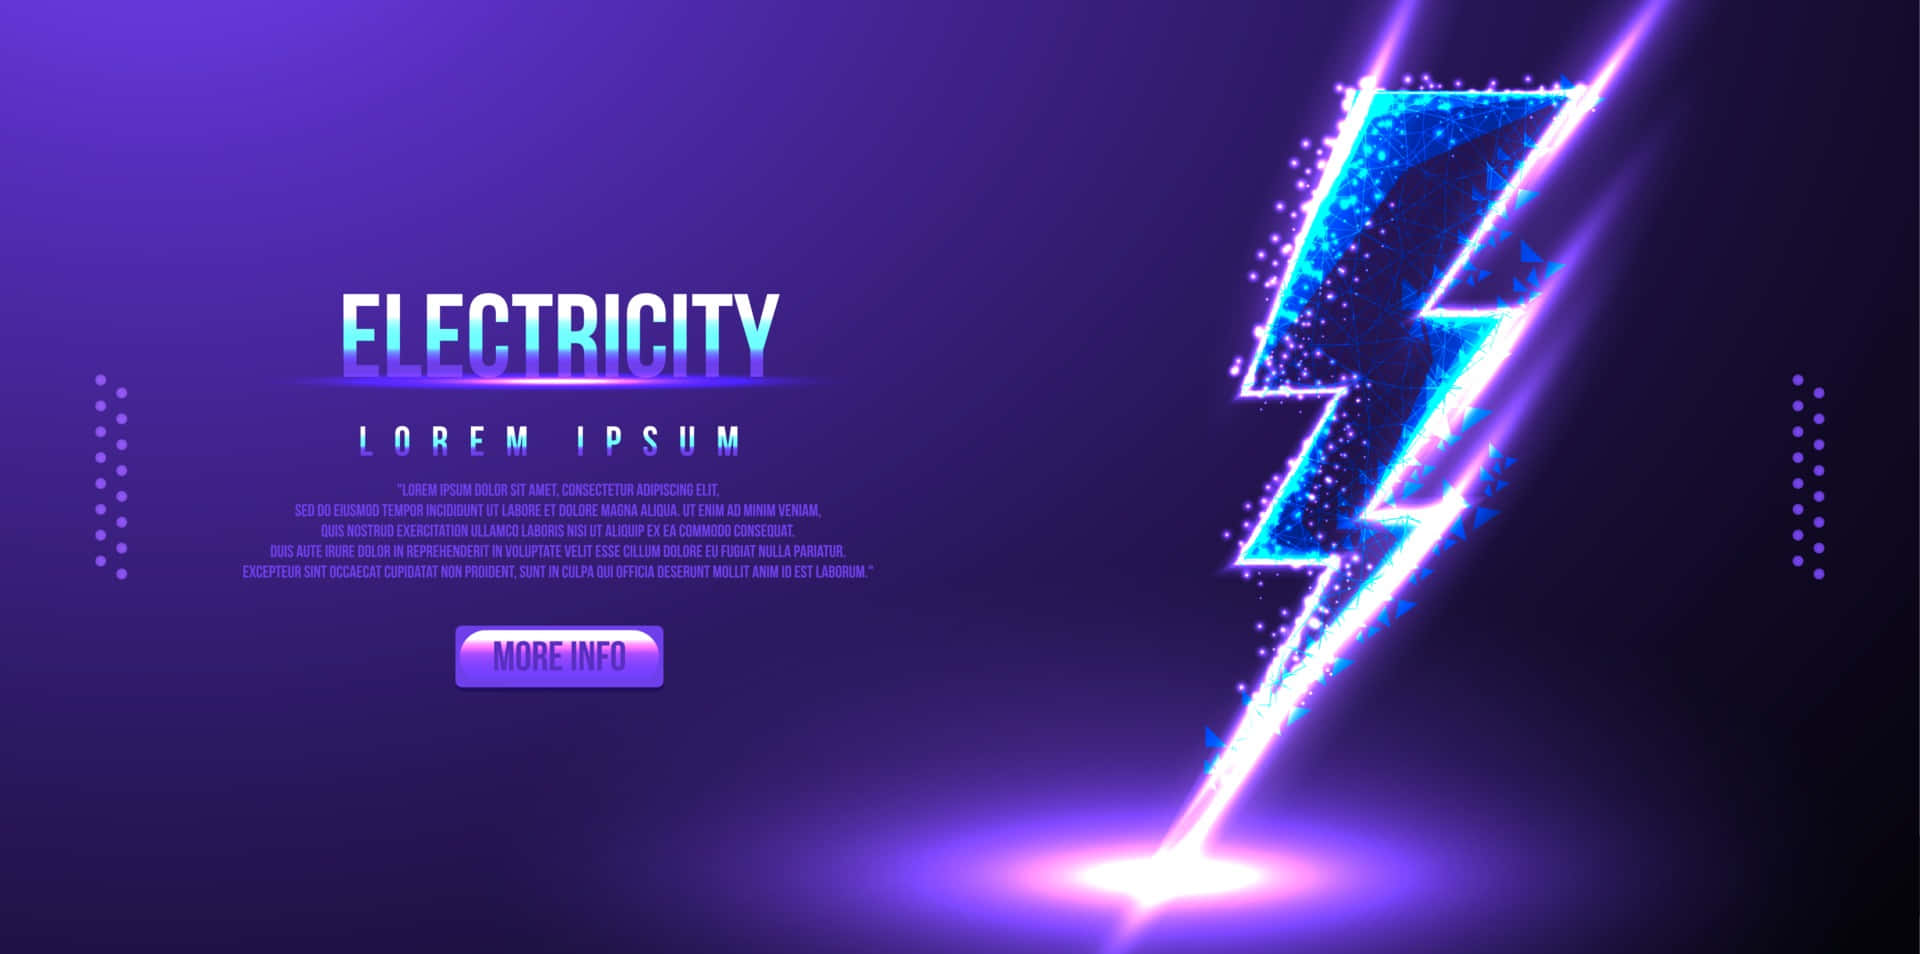 Unleash Electric's Power